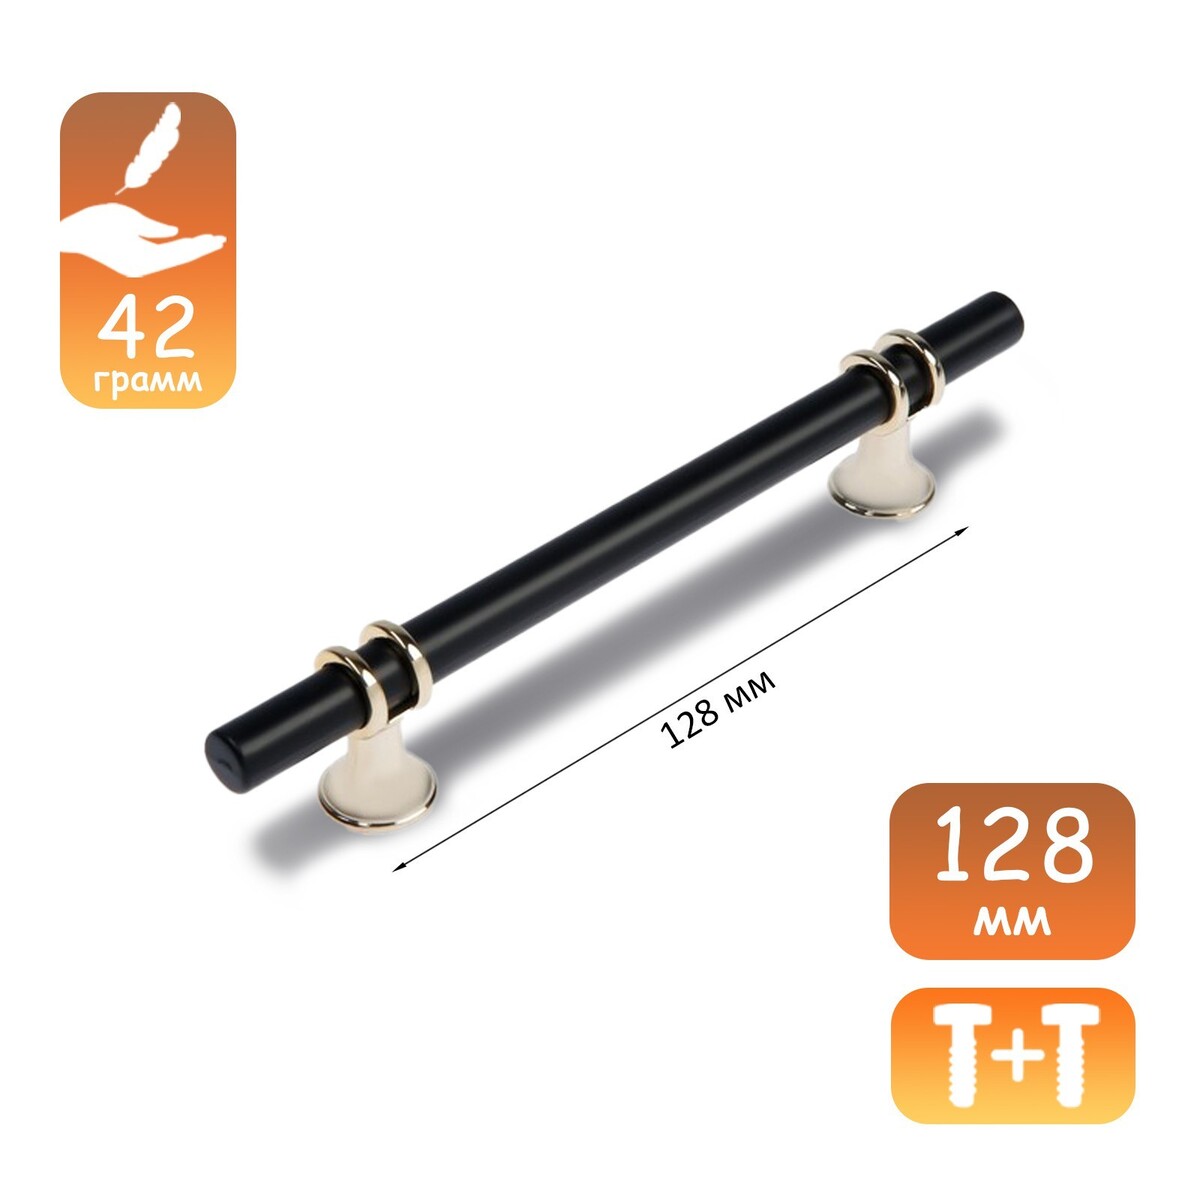 Ручка скоба cappio, м/о 128 мм, d=12 mm, пластик, цвет золото/черный ручка скоба cappio м о 128 мм